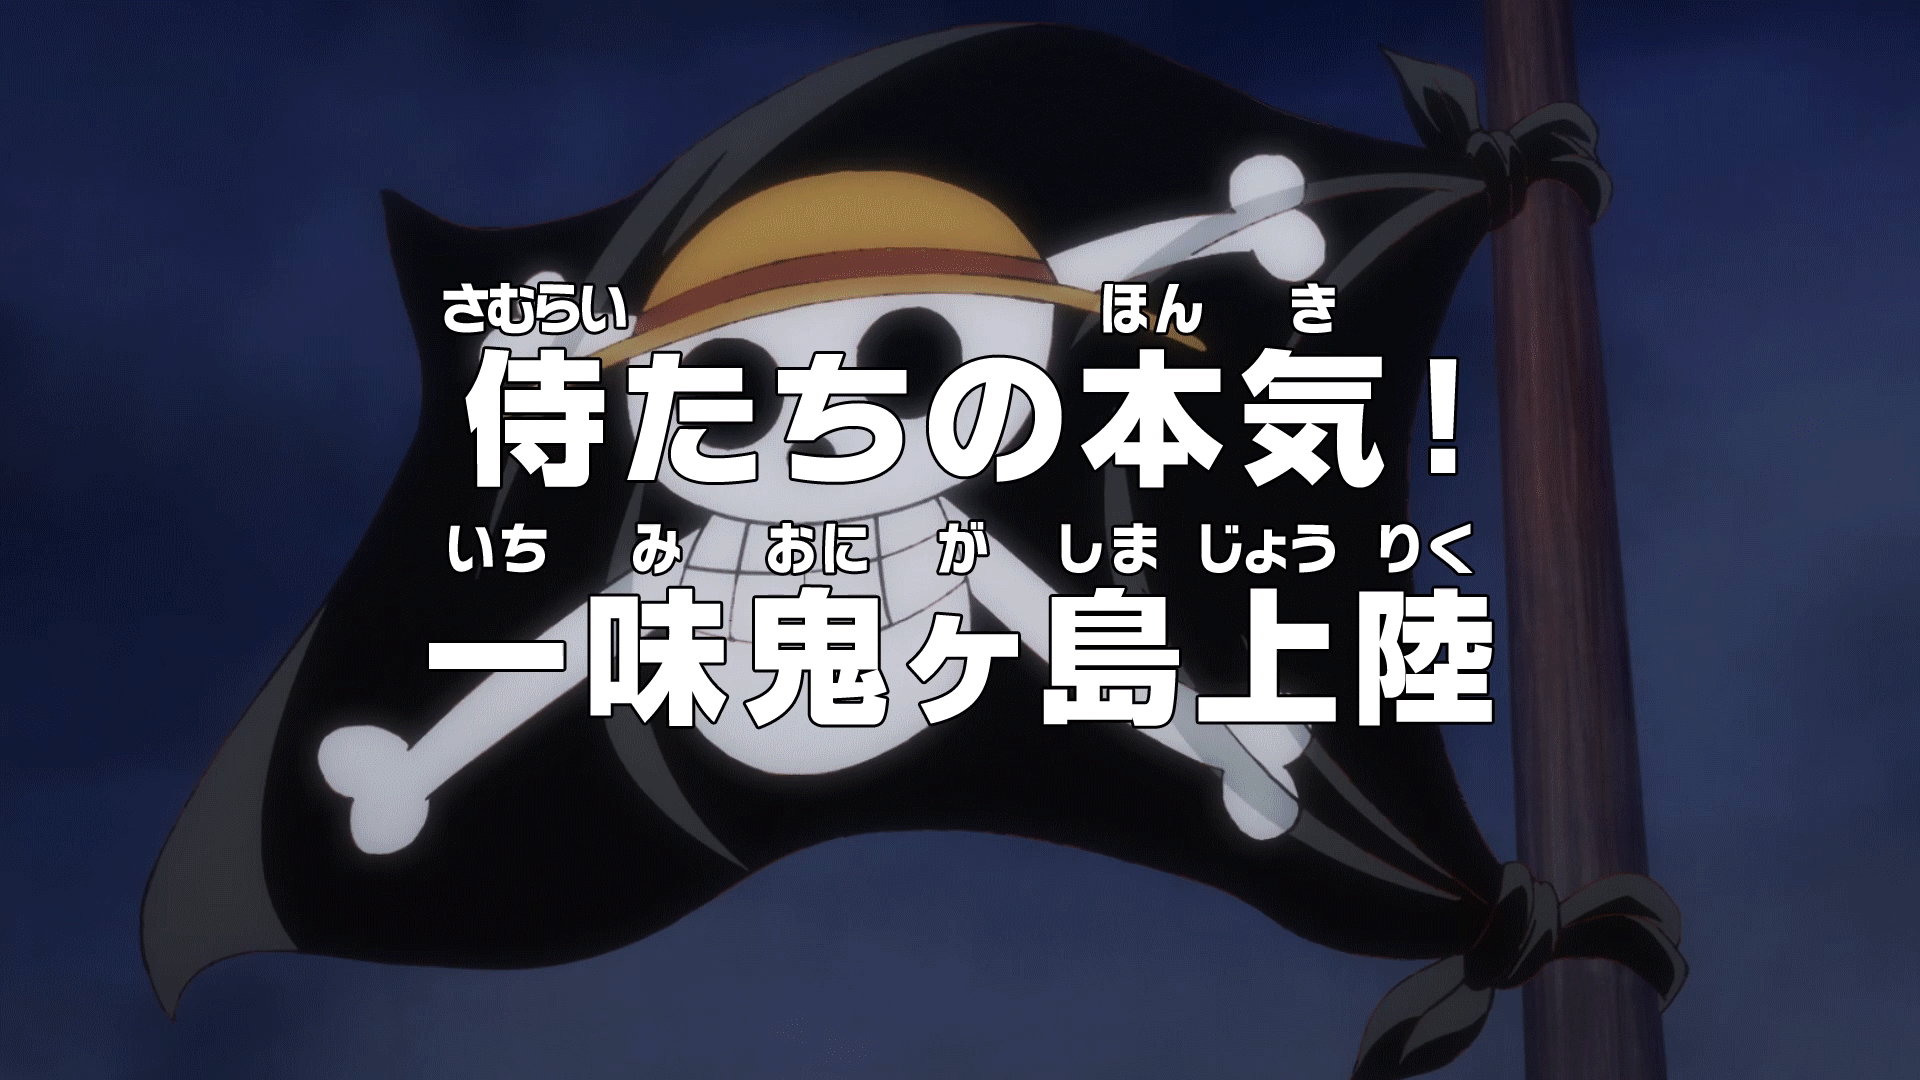 One Piece Reveals Episode 1073 Preview - Anime Corner